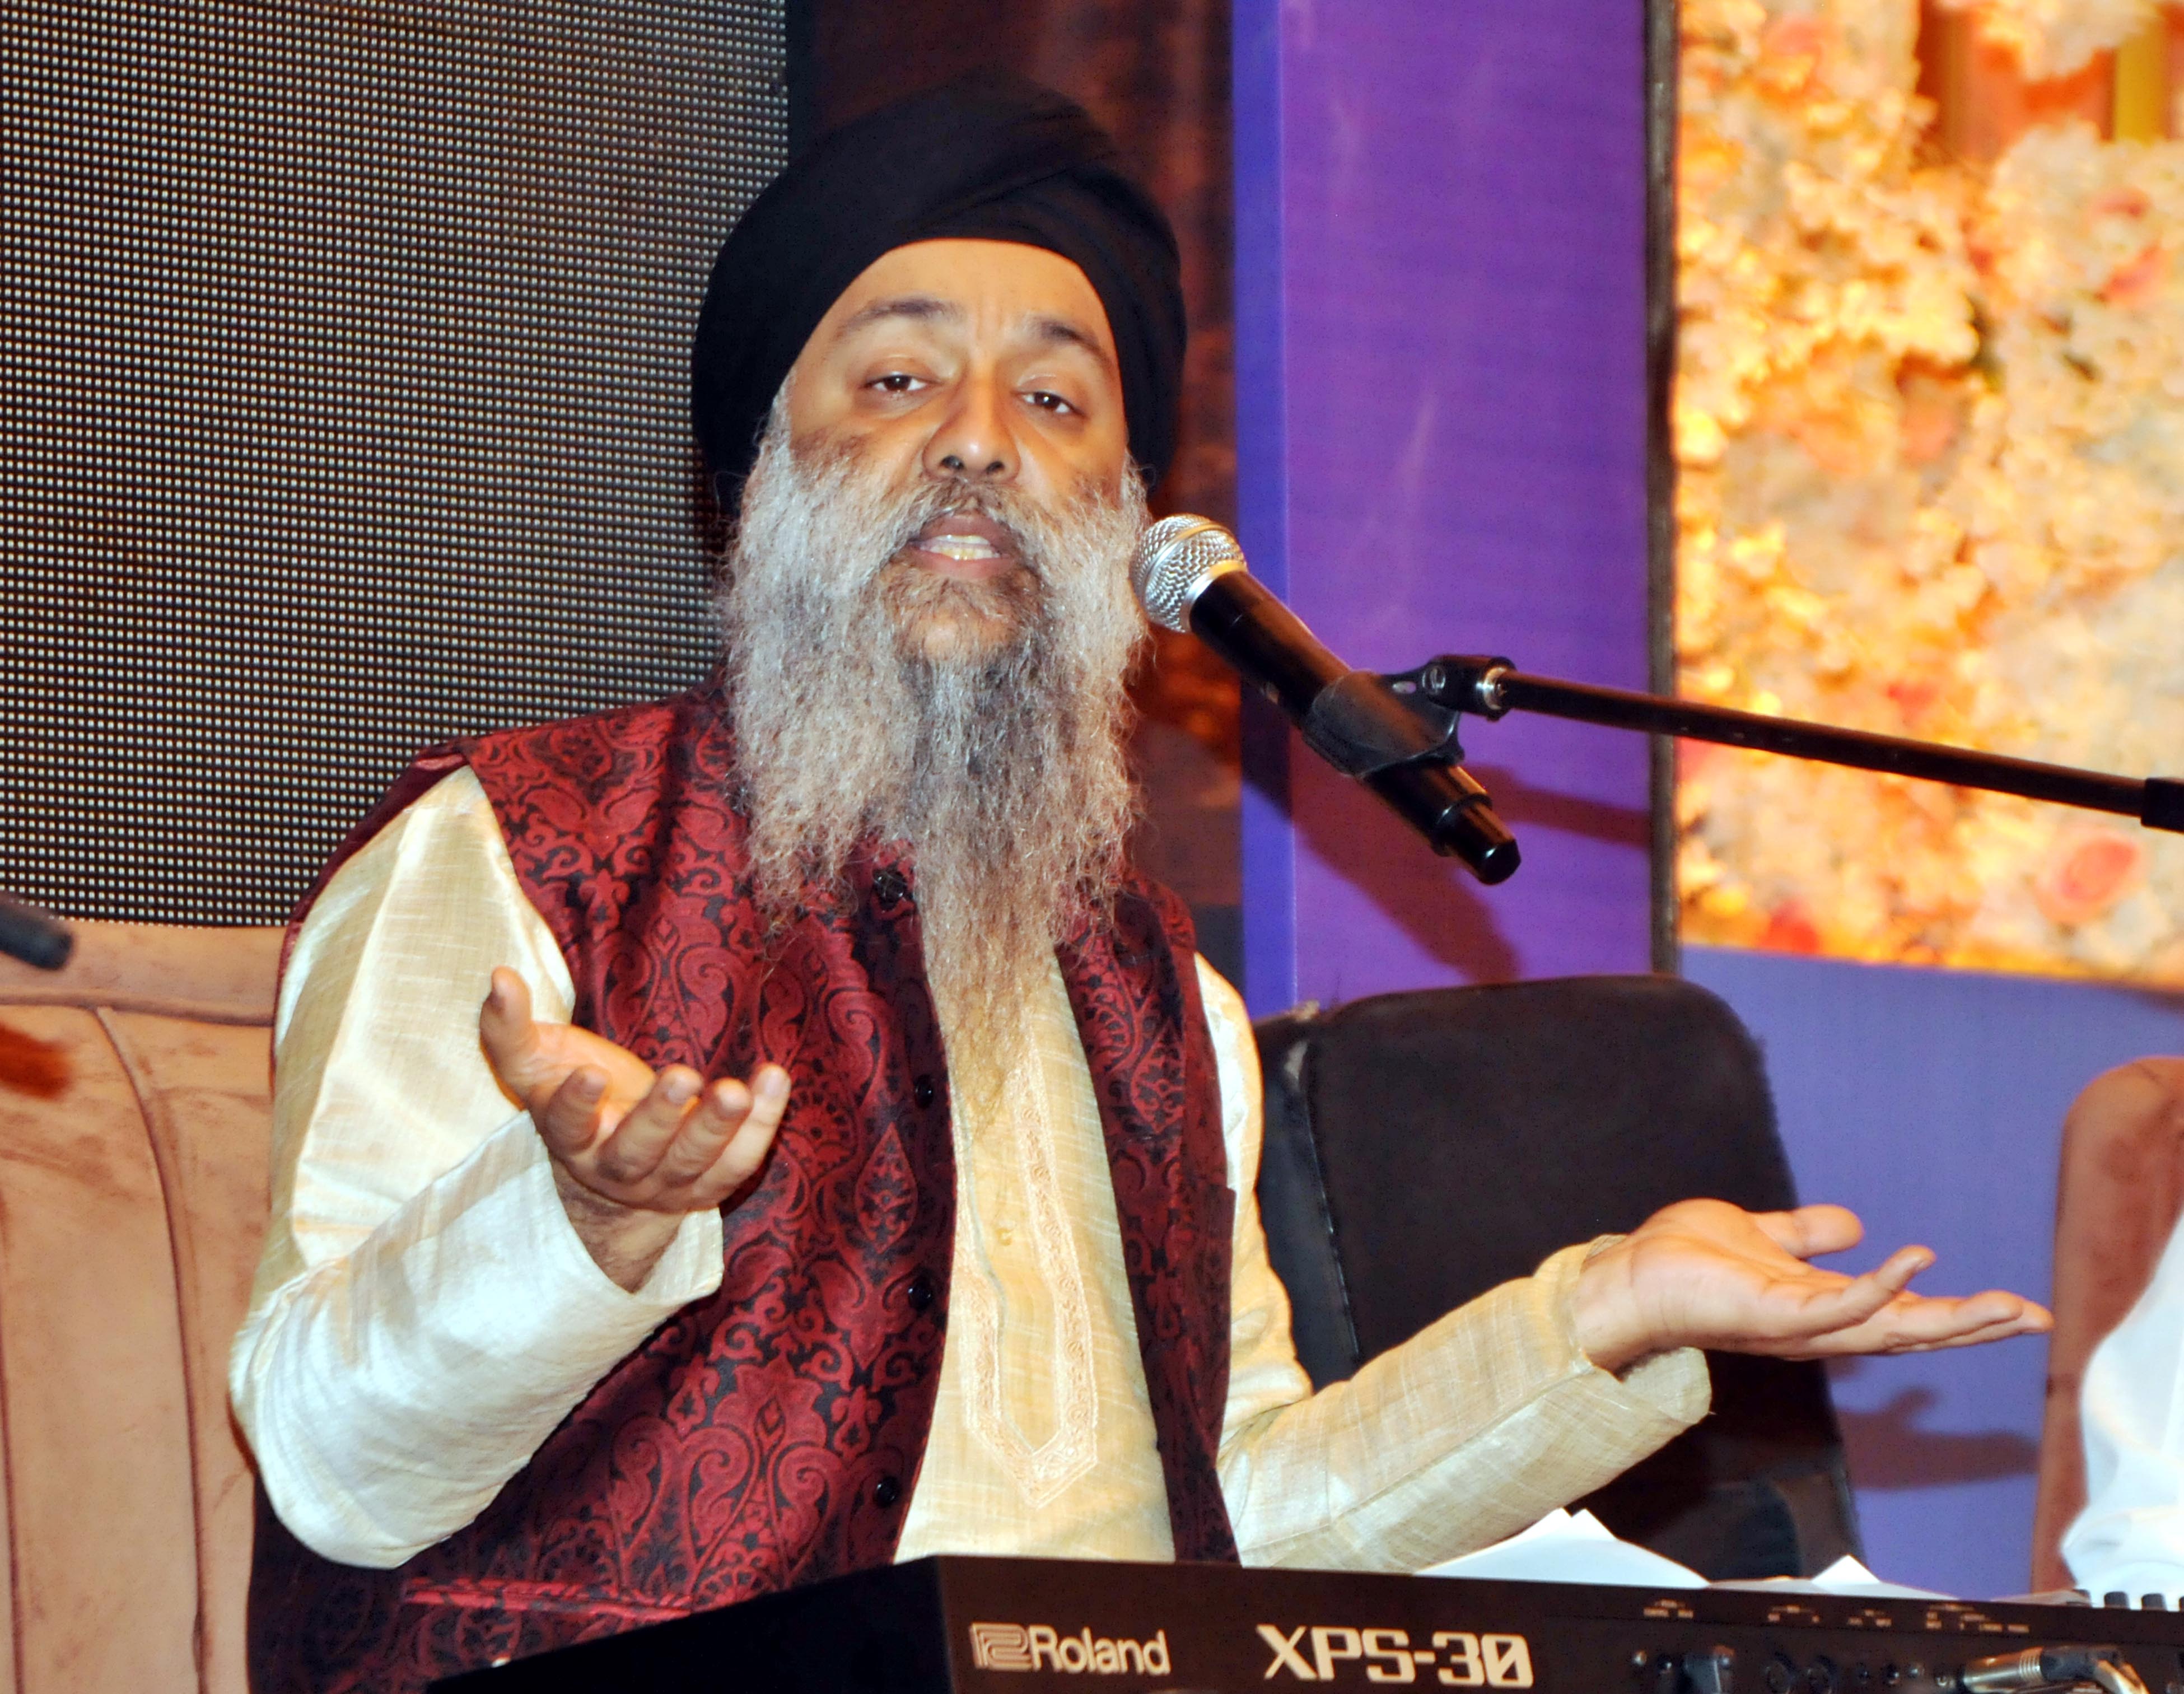 Spreading Guru Nanak's message of oneness through his music